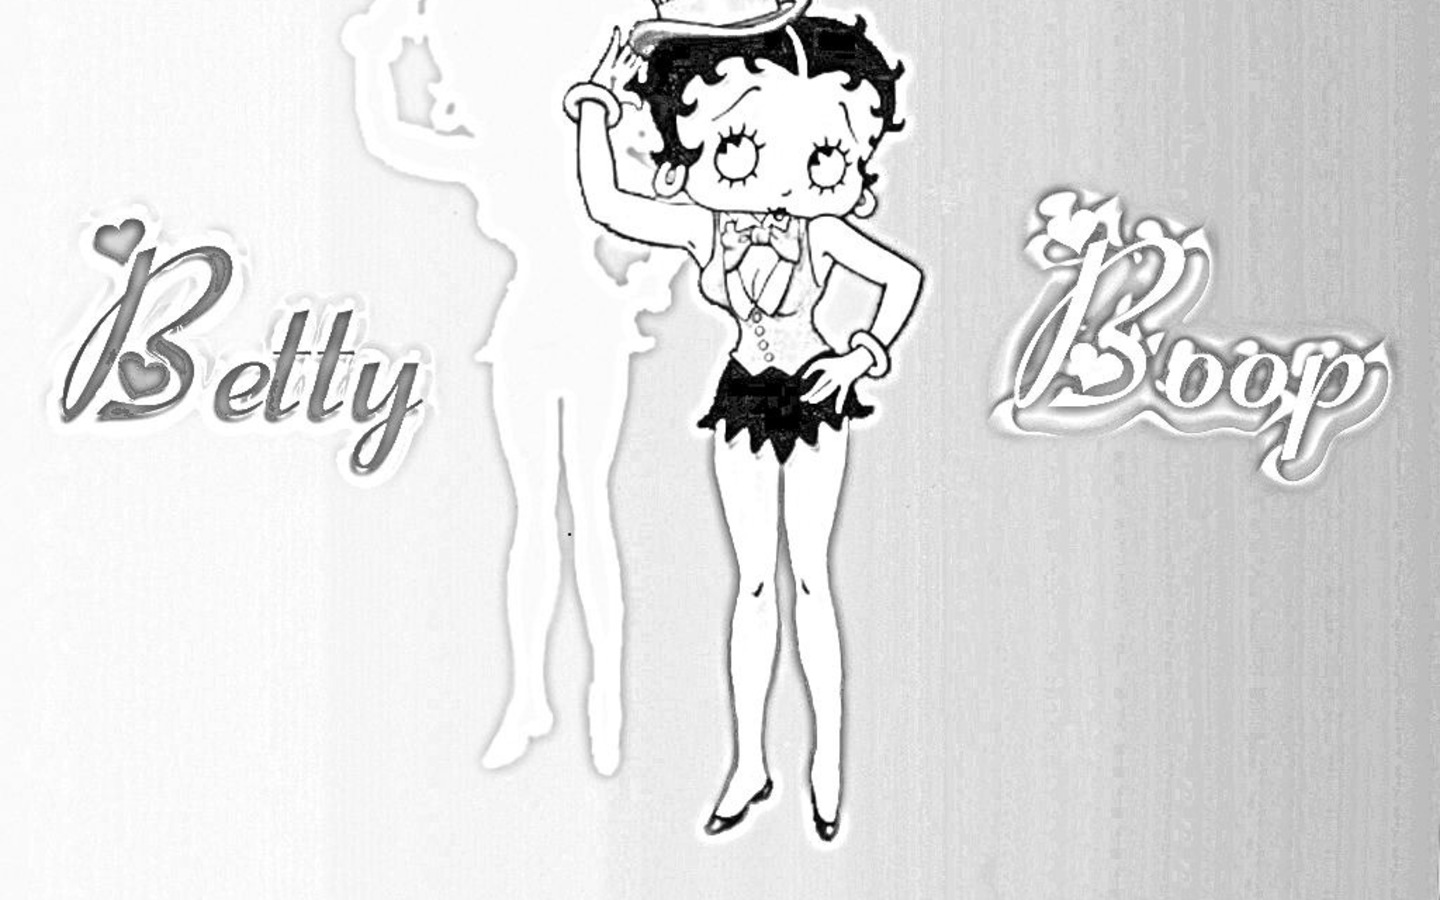 Betty Boop Wallpapers Apk Download for Android Latest version 110  comalfatihstudiosbettyboopwallpaperhd